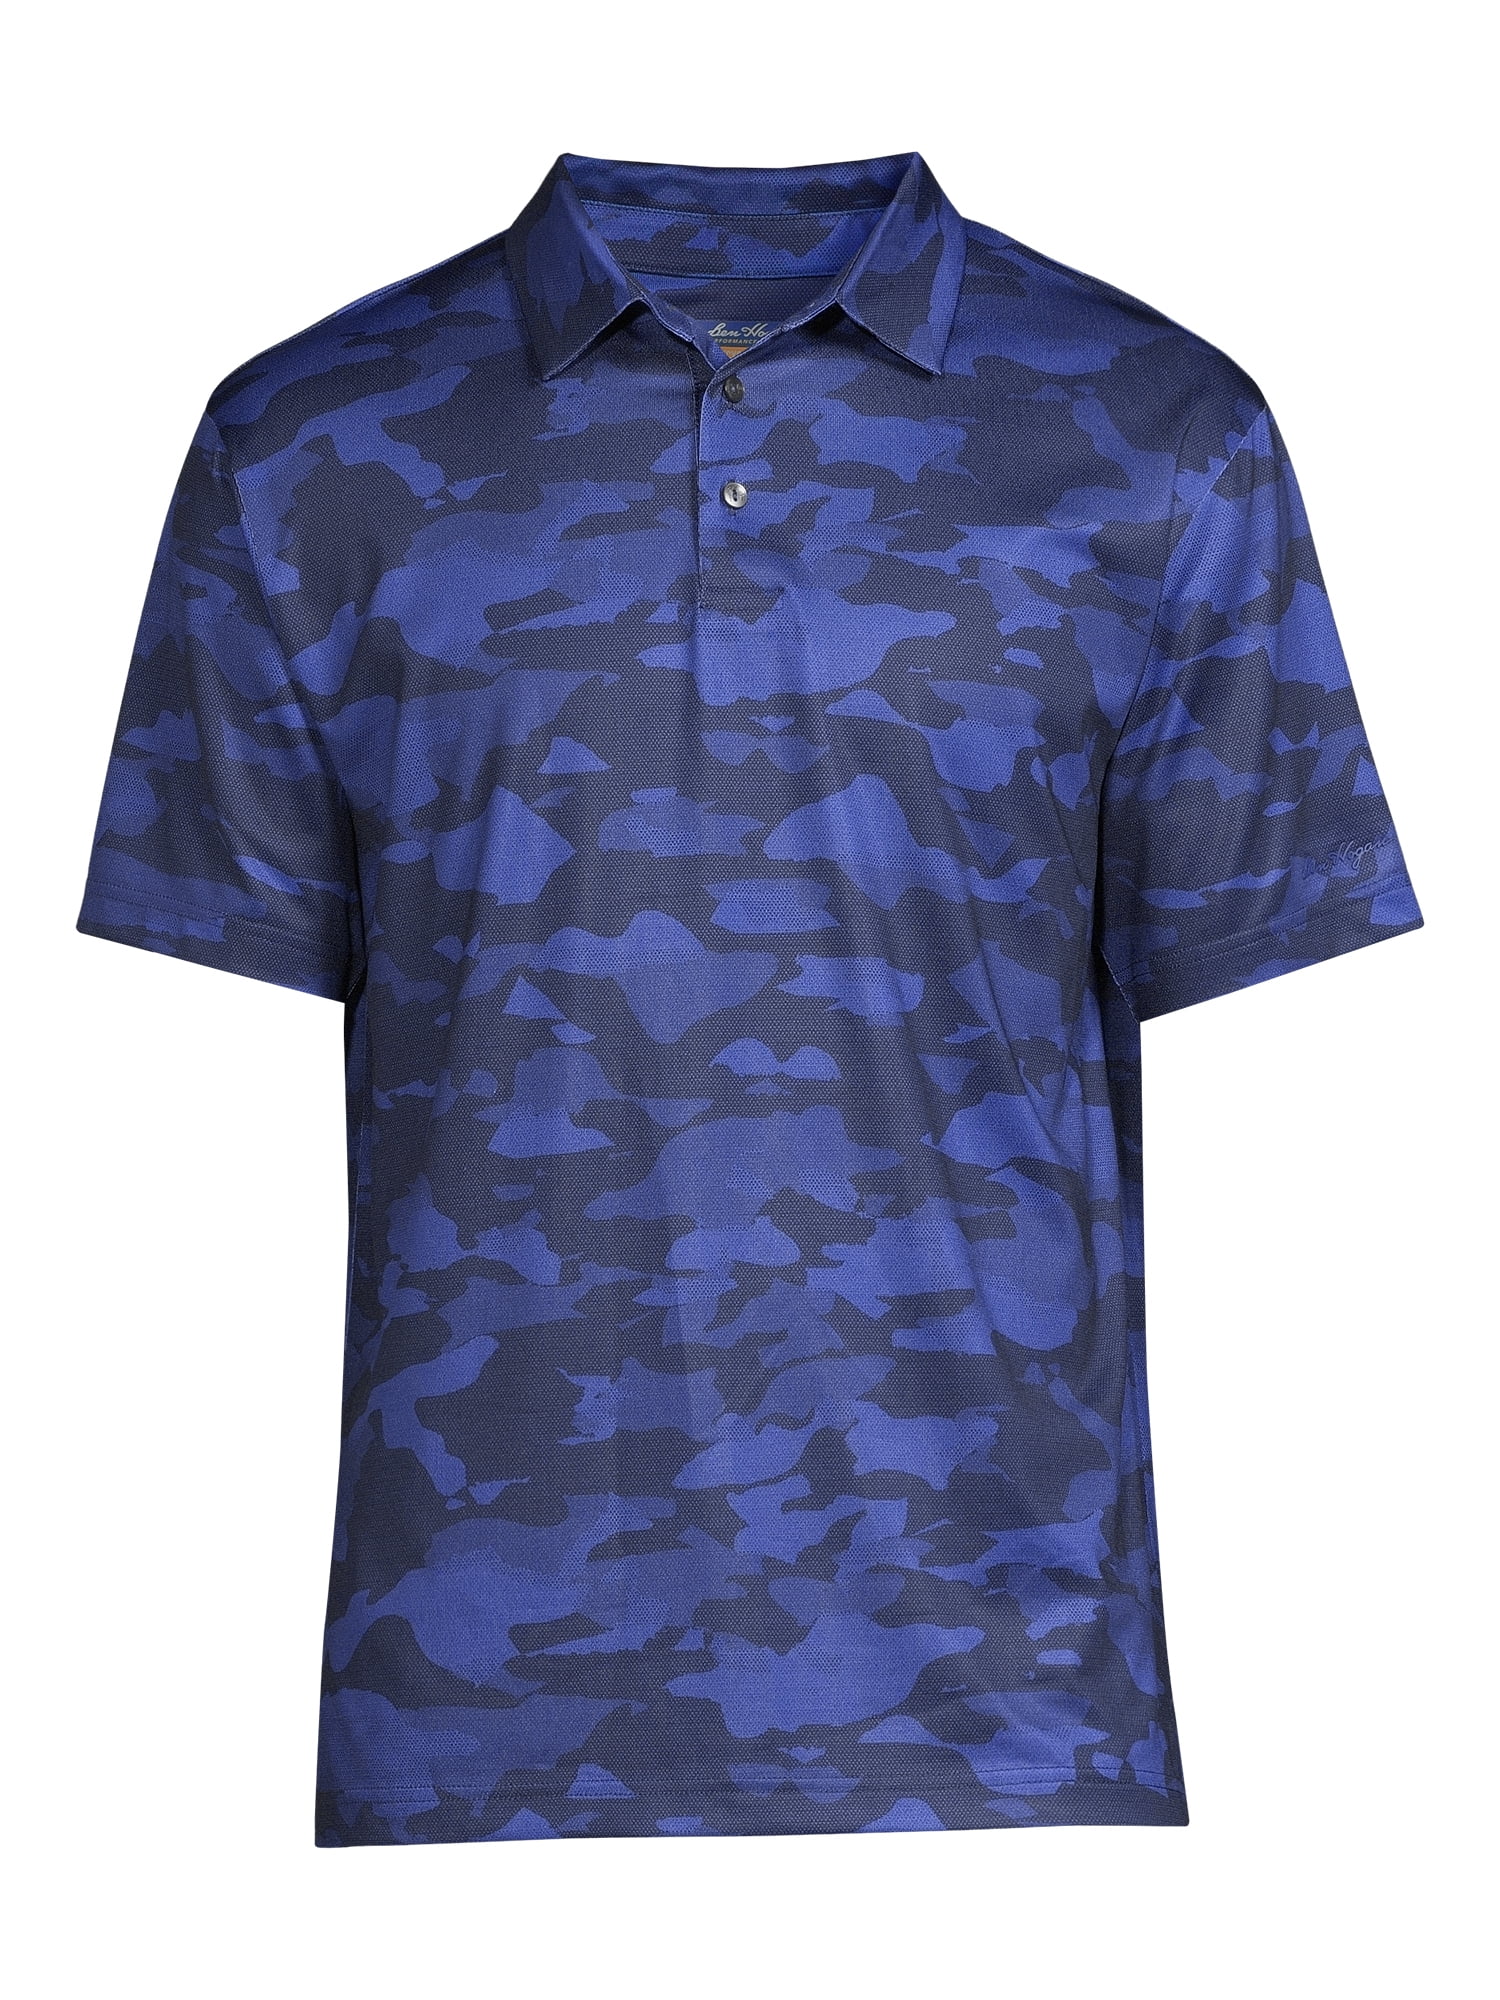 Continu verbergen impliceren Ben Hogan Men's and Big Men's Camouflage Golf Polo Shirt with Short  Sleeves, Sizes S-5XL - Walmart.com